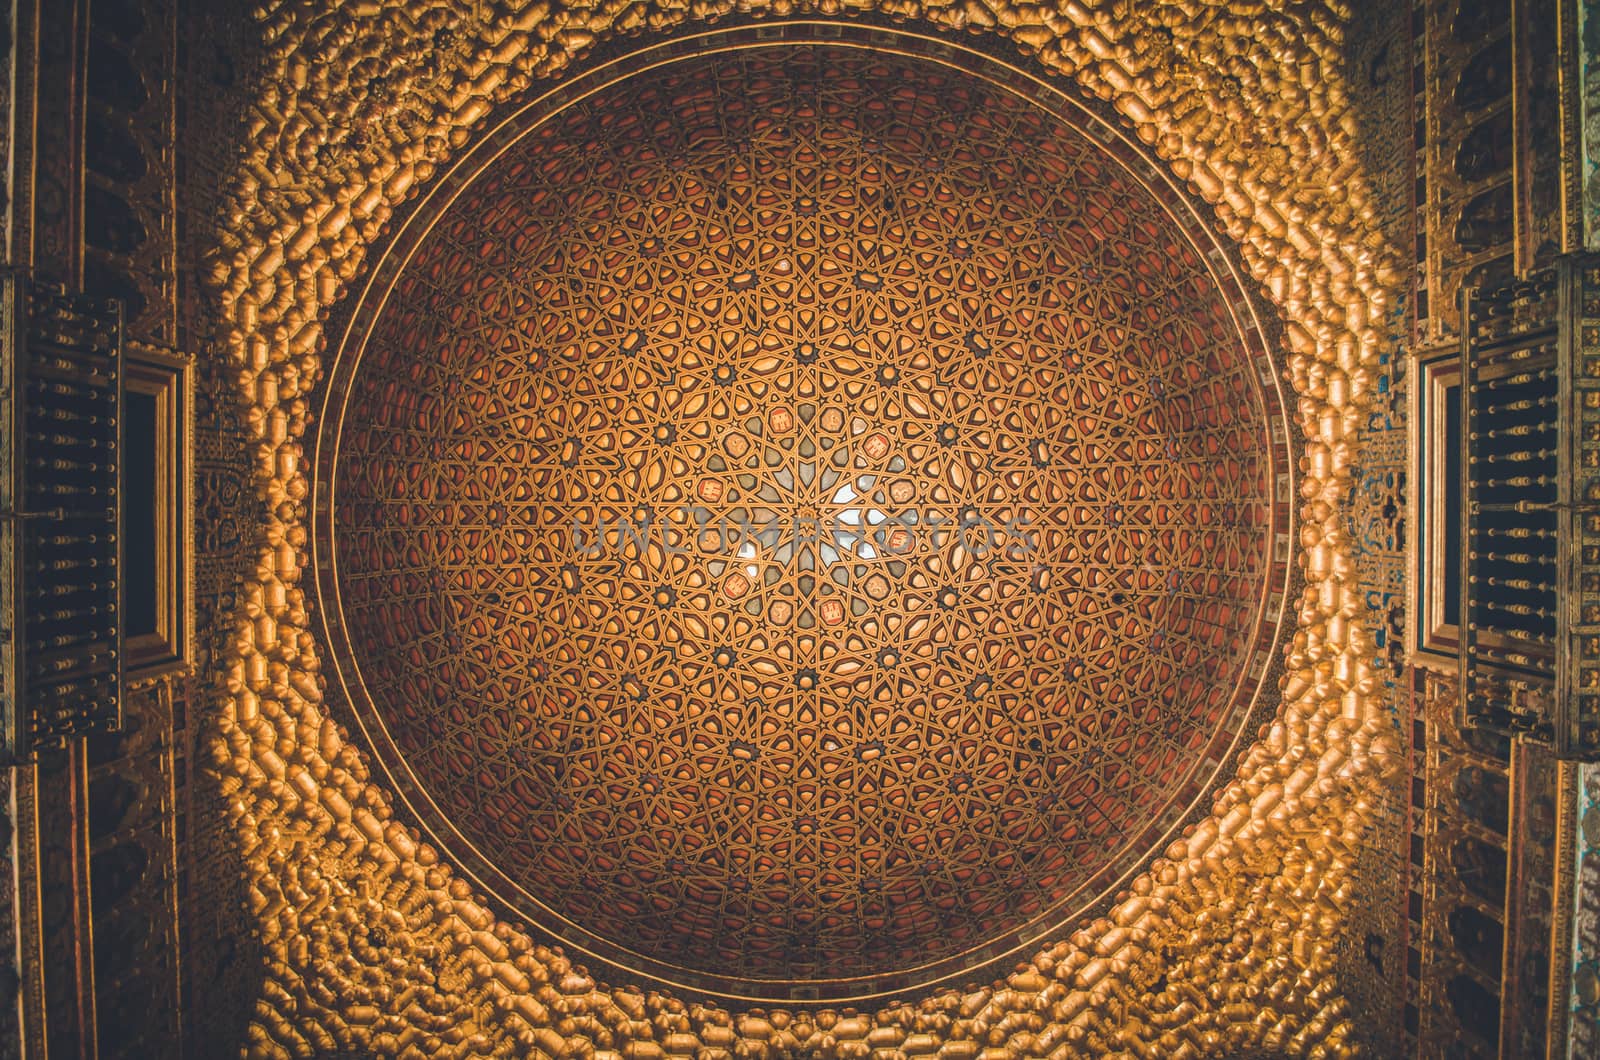 Golden Dome at Alcazar of Sevilla by mikelju